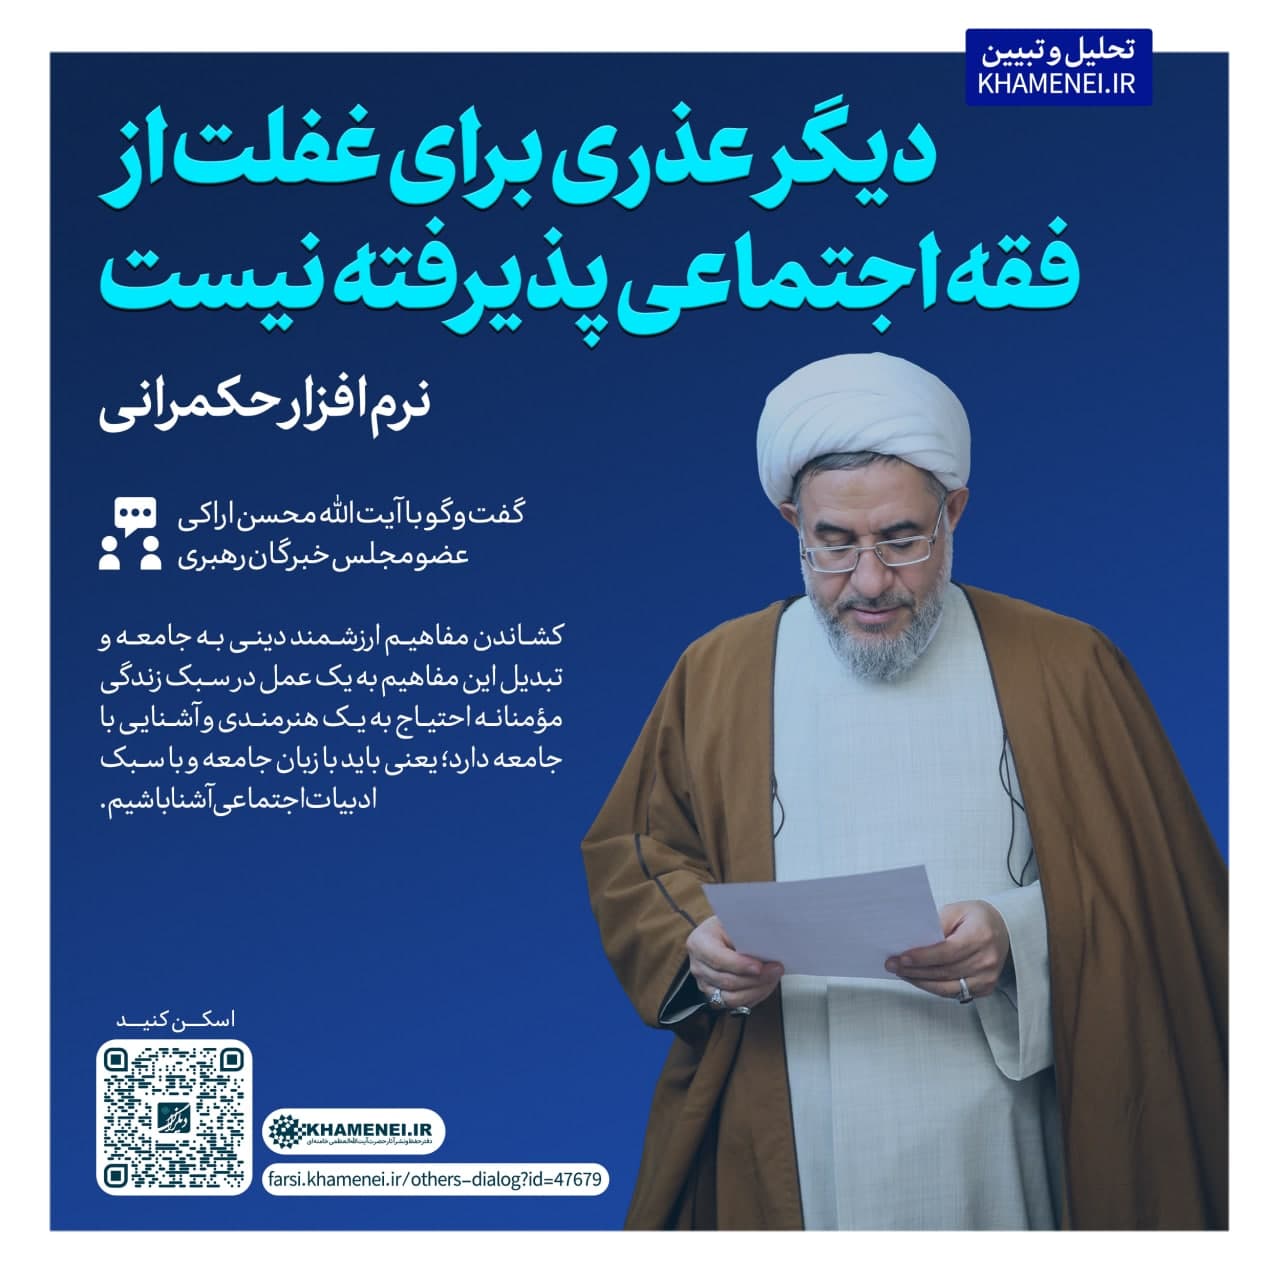 https://idc0-cdn0.khamenei.ir/ndata/news/47679/photo_2021-04-14_05-52-18.jpg